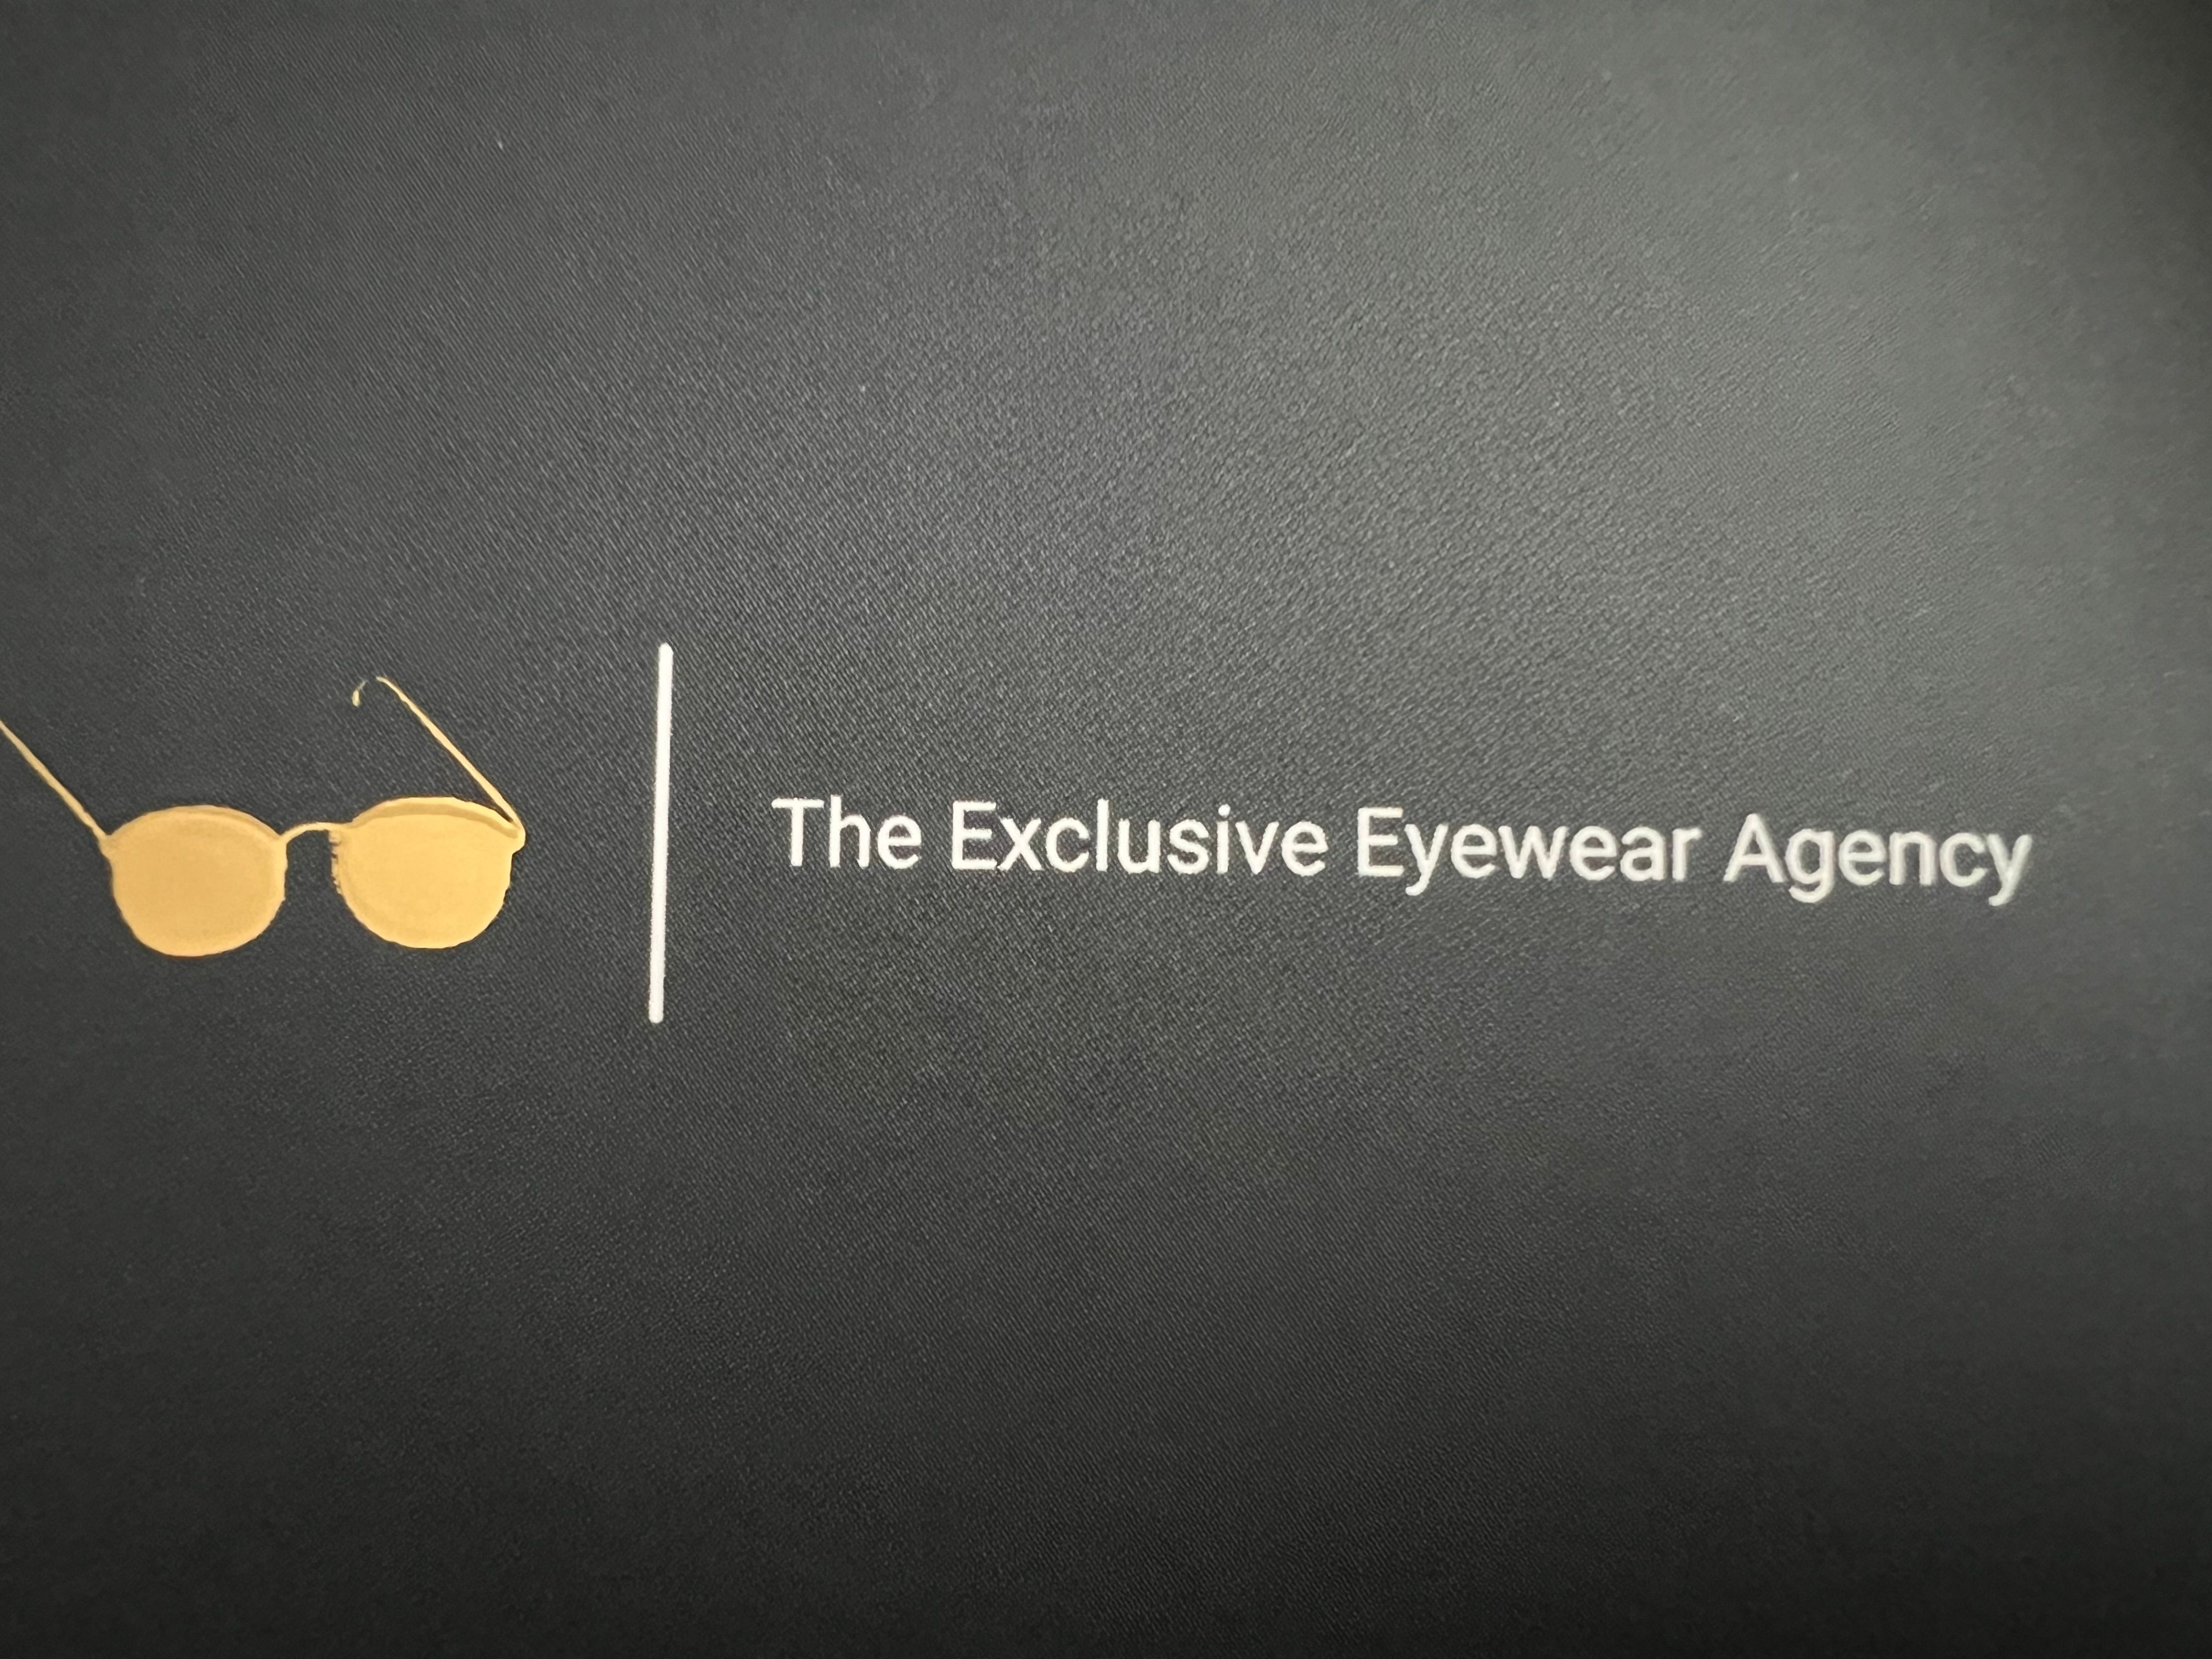 The exclusive eyewear agency